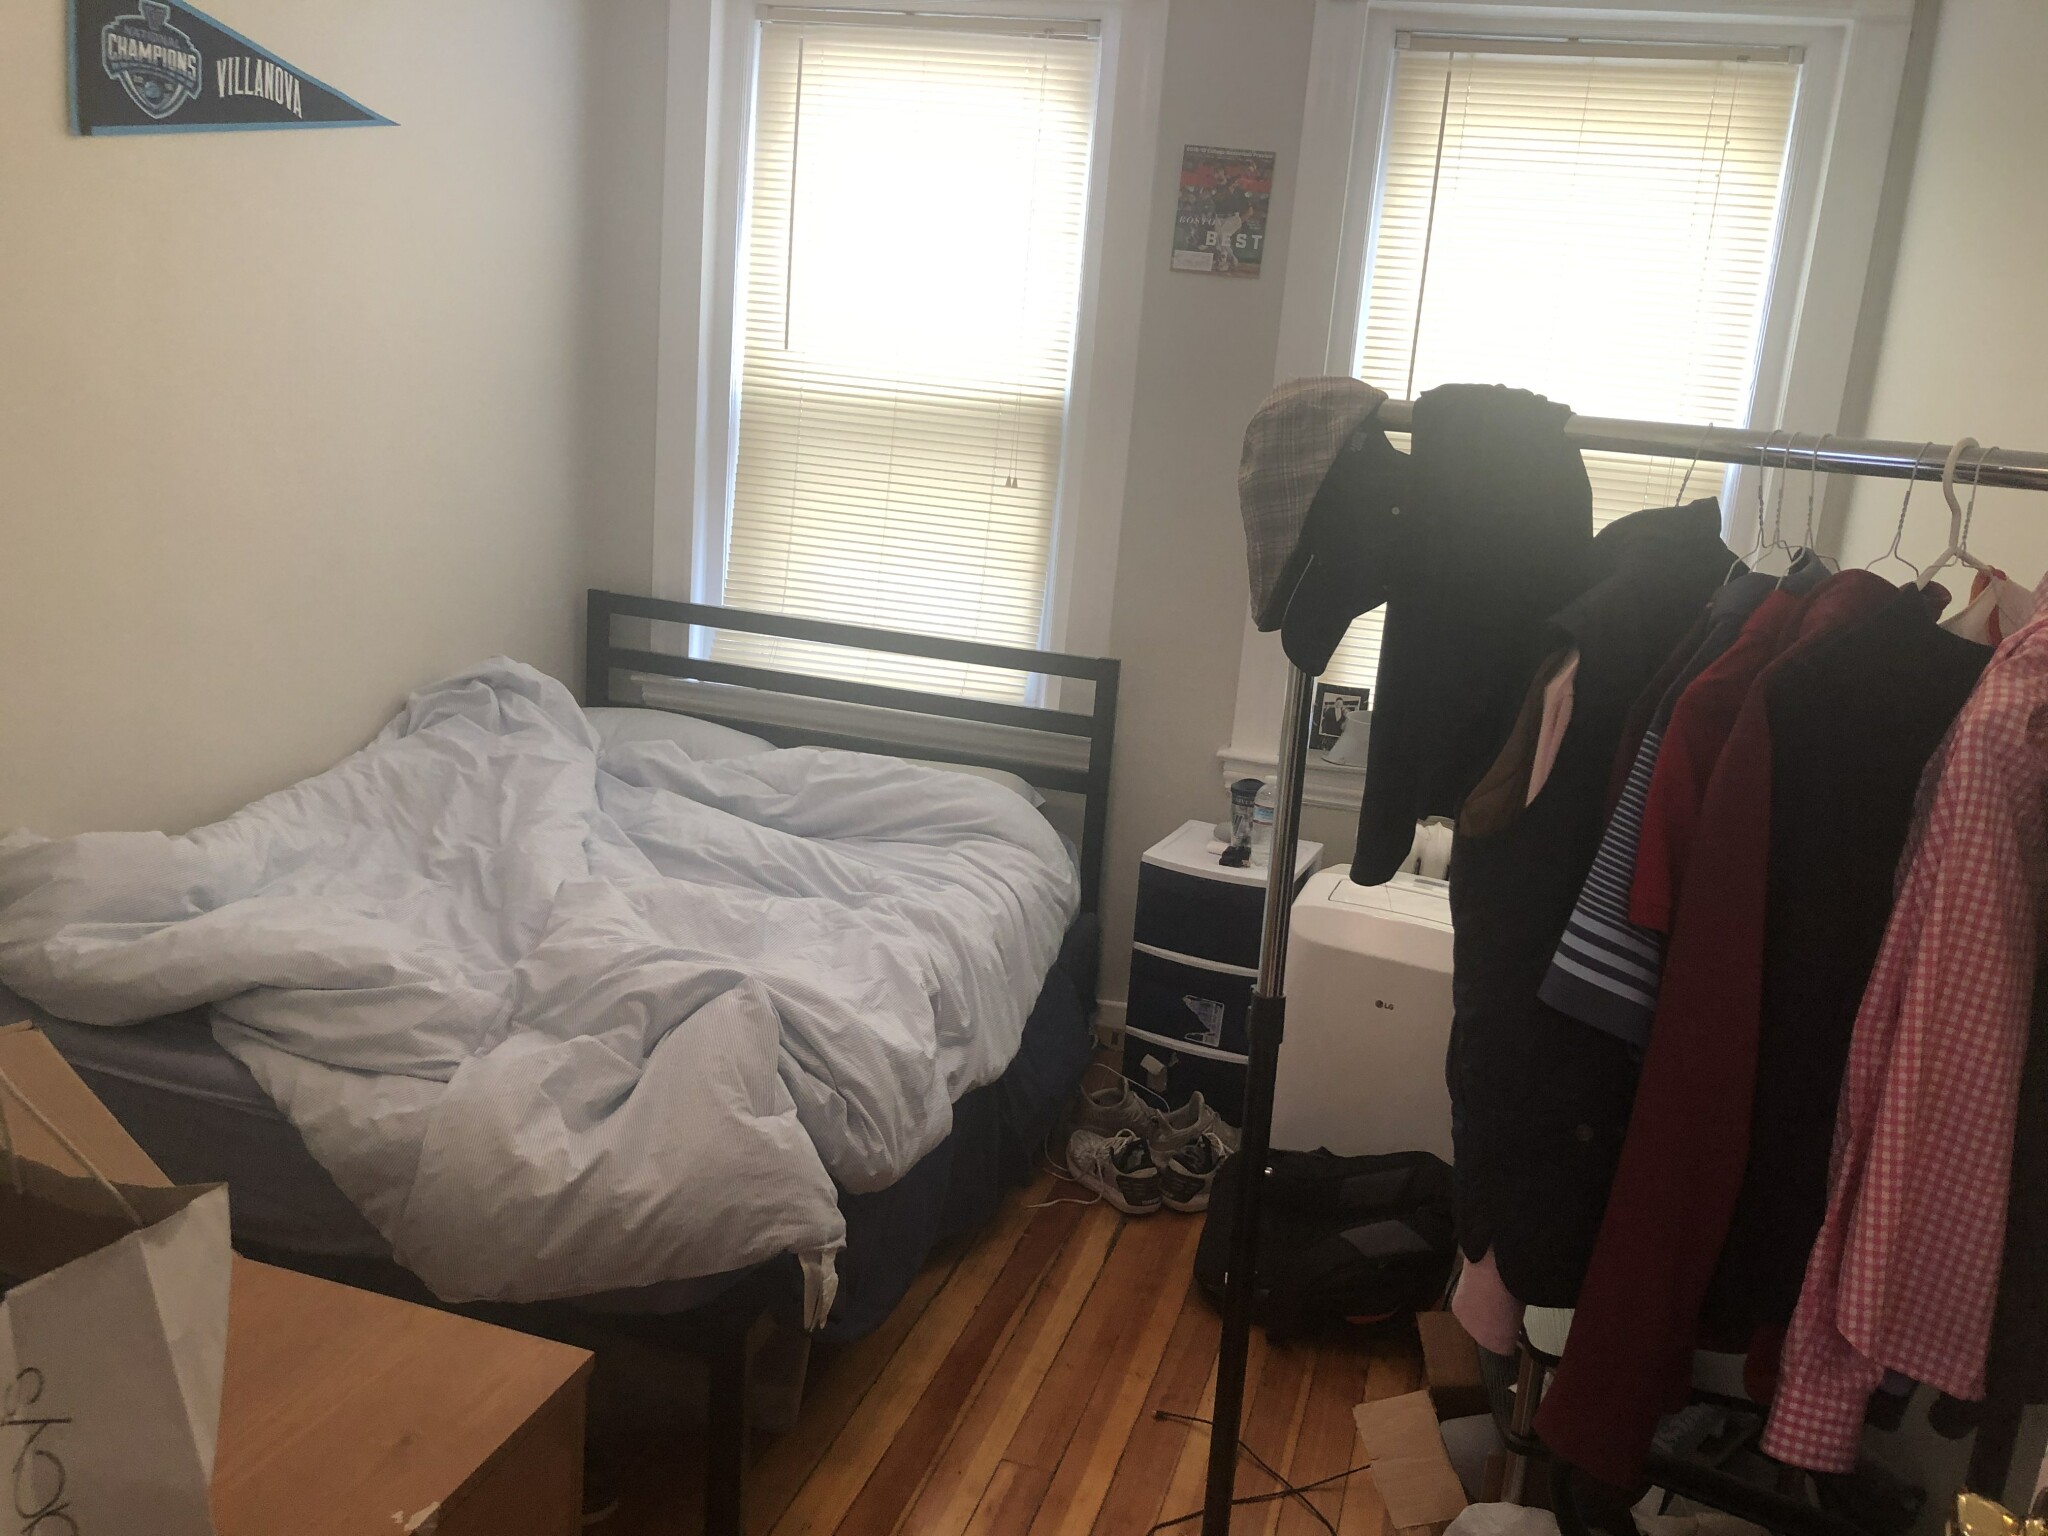 Photos of apartment on Hanover St.,Boston MA 02113